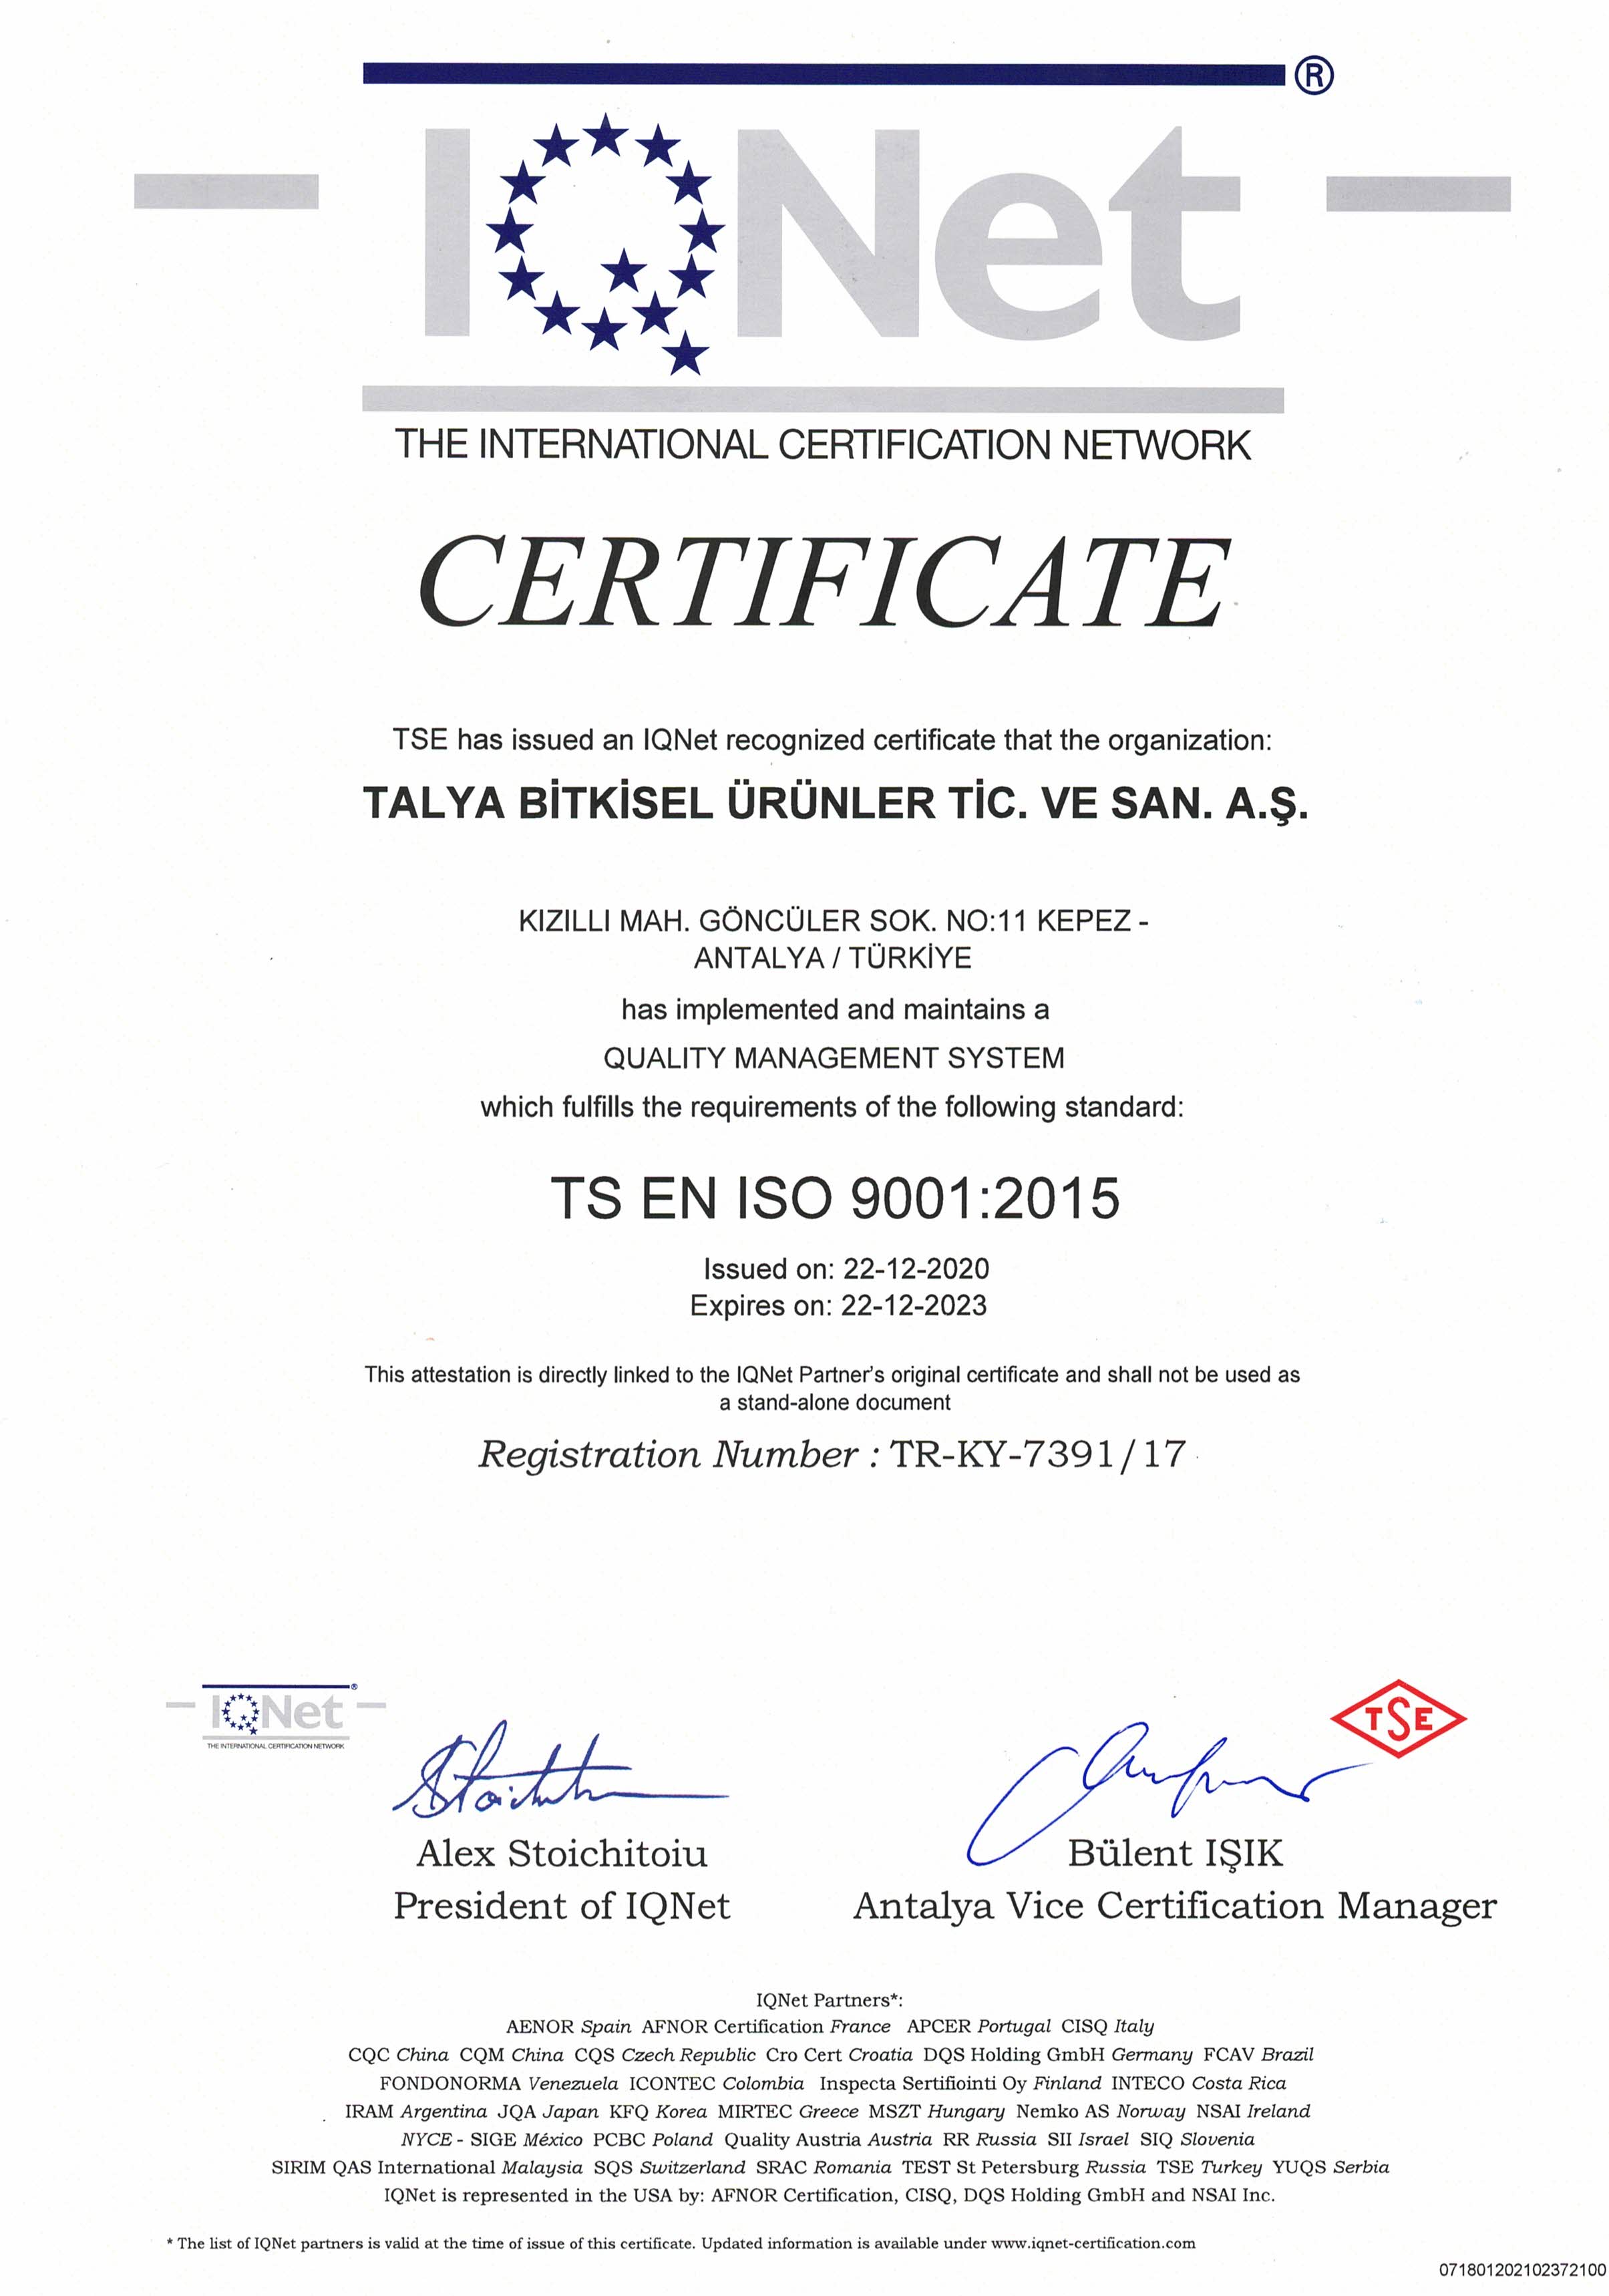 Quality Management System TS EN ISO 9001:2015 belgesi talya bitkisel